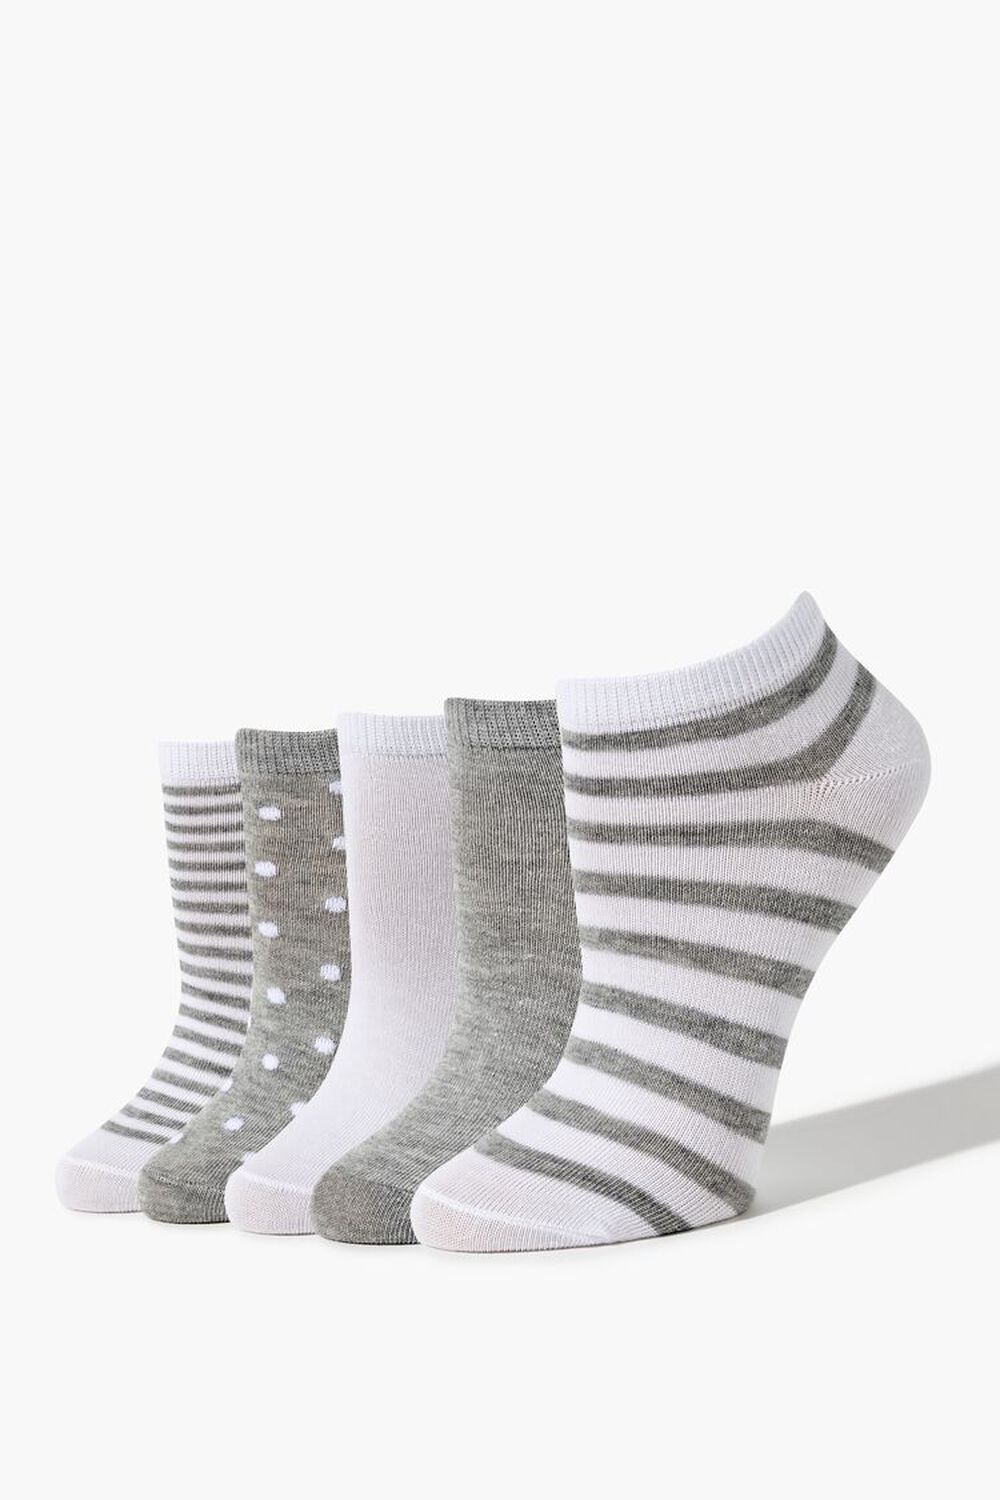 Assorted Ankle Sock Set - 5 Pack, image 1